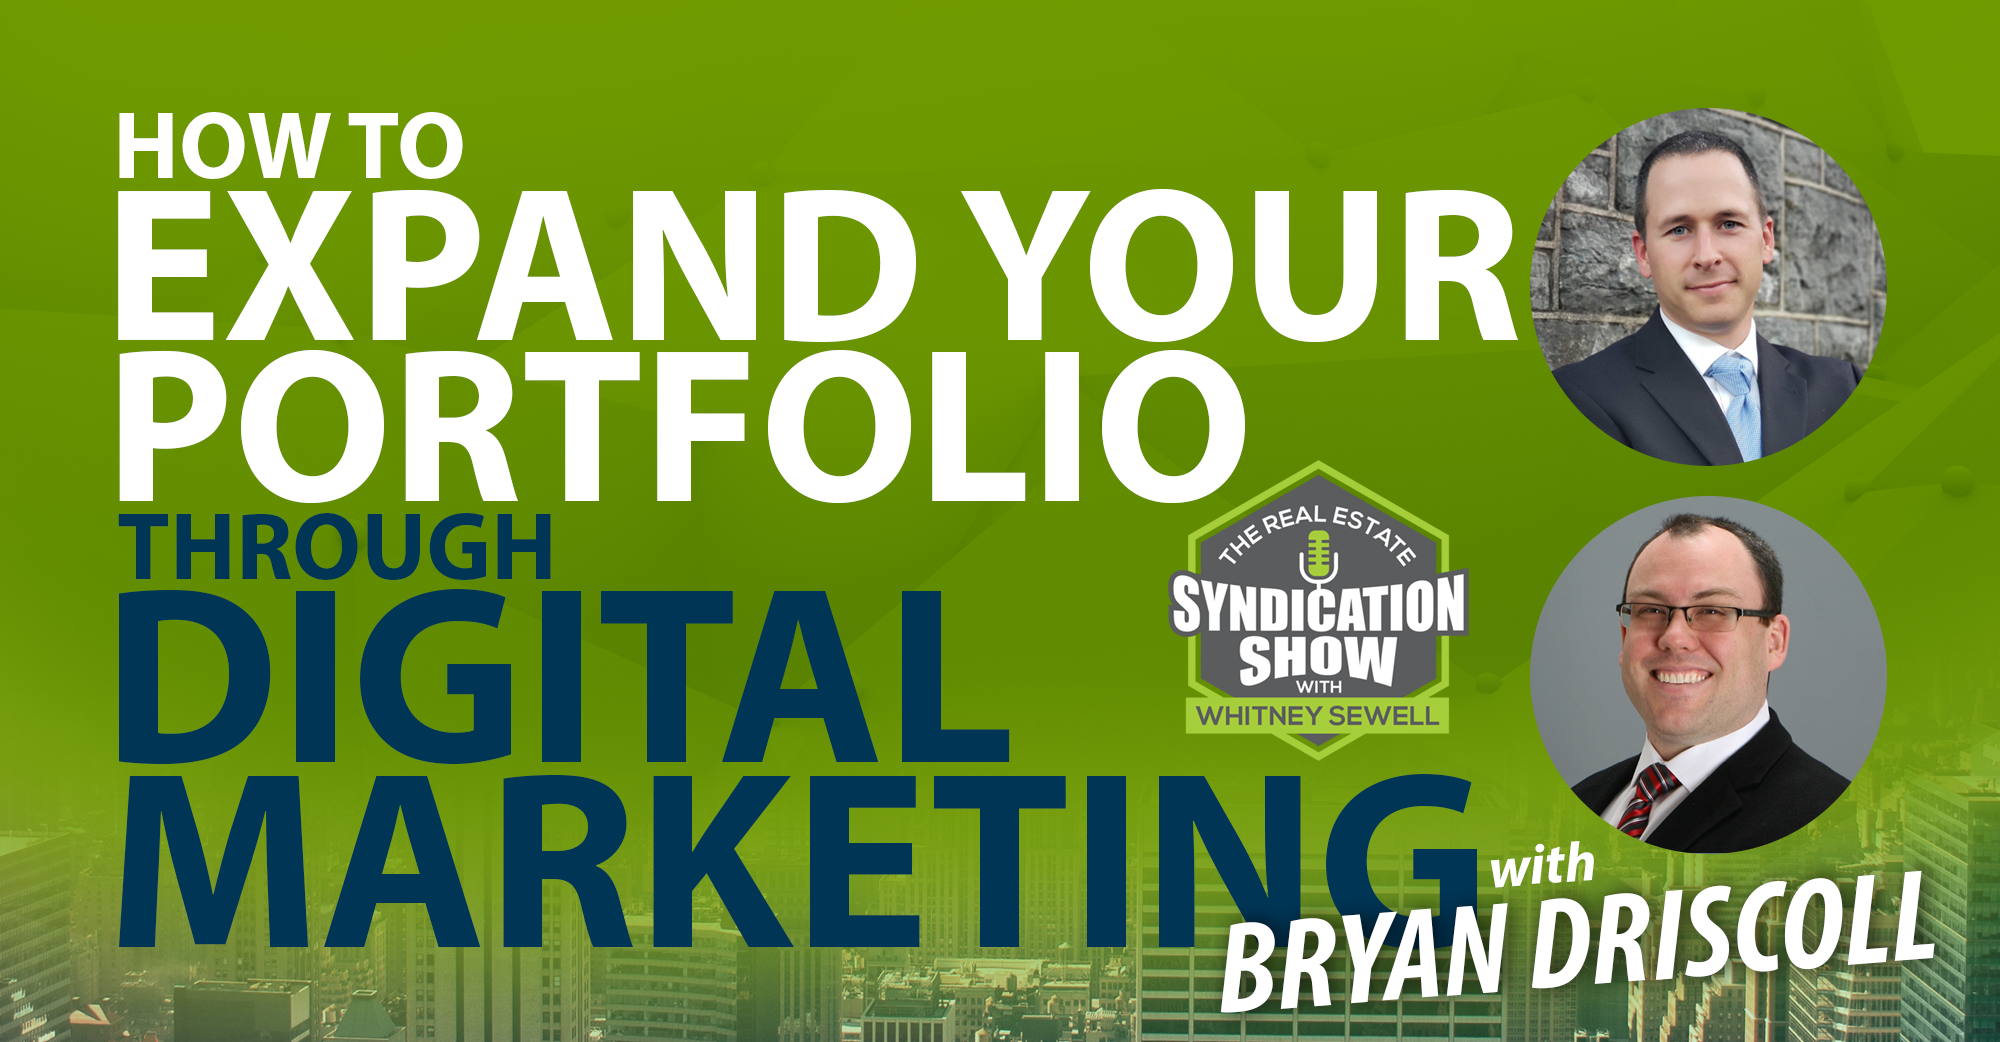 How to Expand Your Portfolio Through Digital Marketing with Brian Driscoll